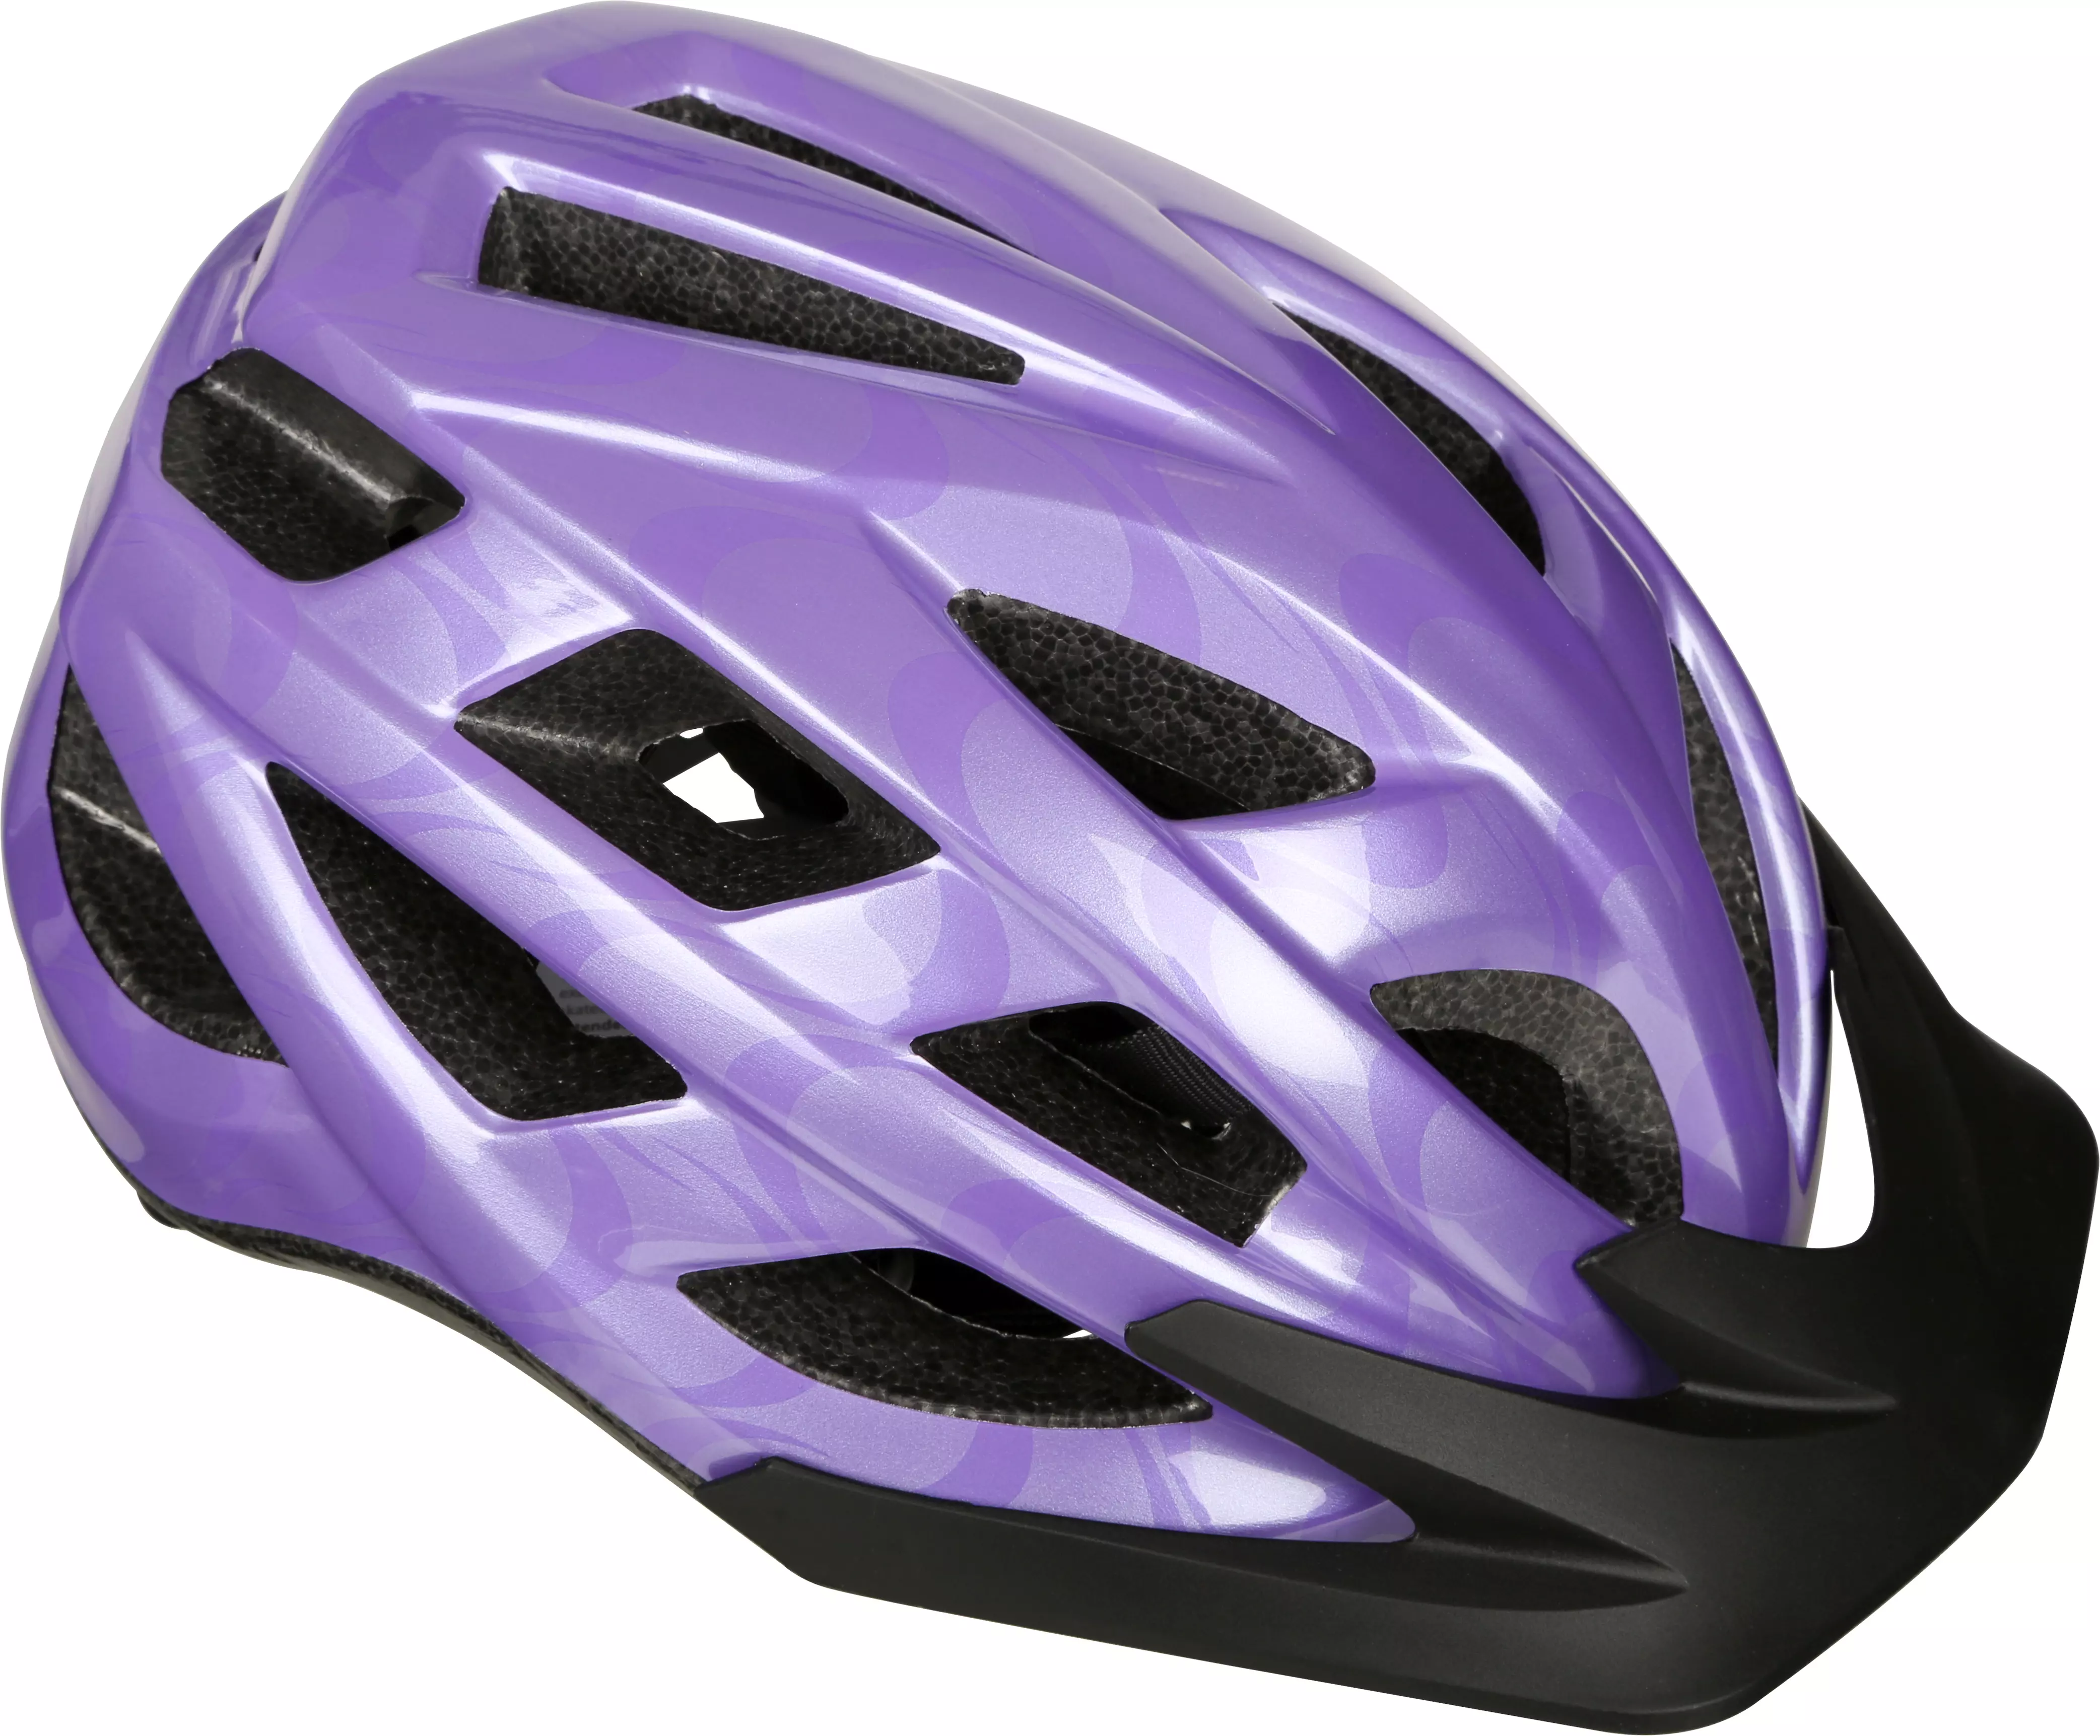 325g Limar Champ Kids Youth Bike Helmet 52-58cm Violet Purple Size M 